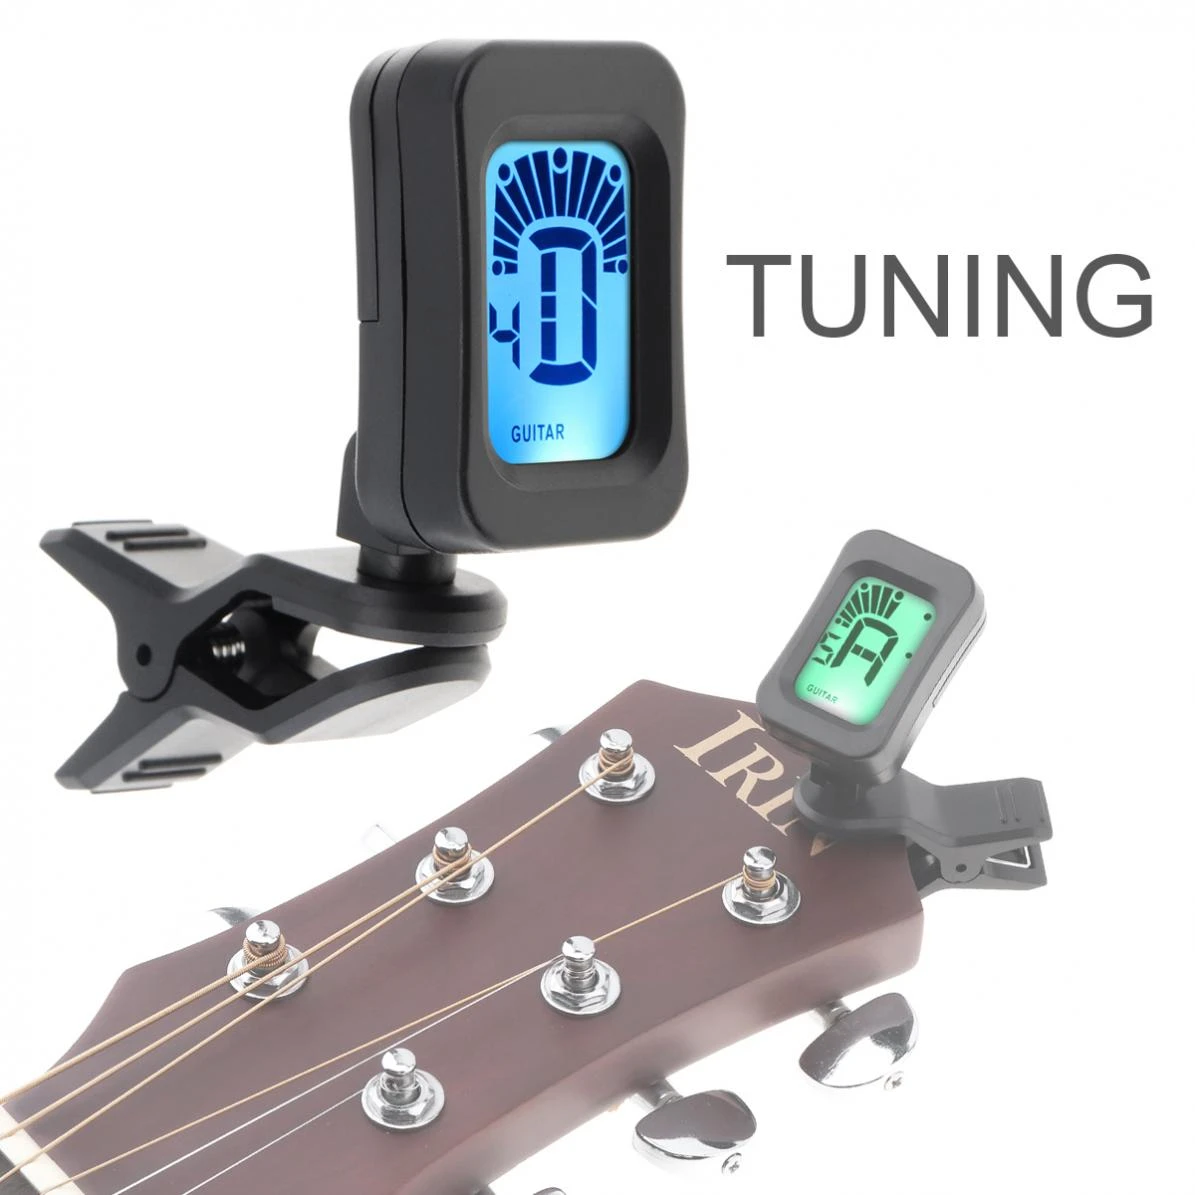 Black Clip On Guitar Tuner Portable Universal LCD Display Digital Tuner for Chromatic Guitar / Bass / Ukulele / Violin